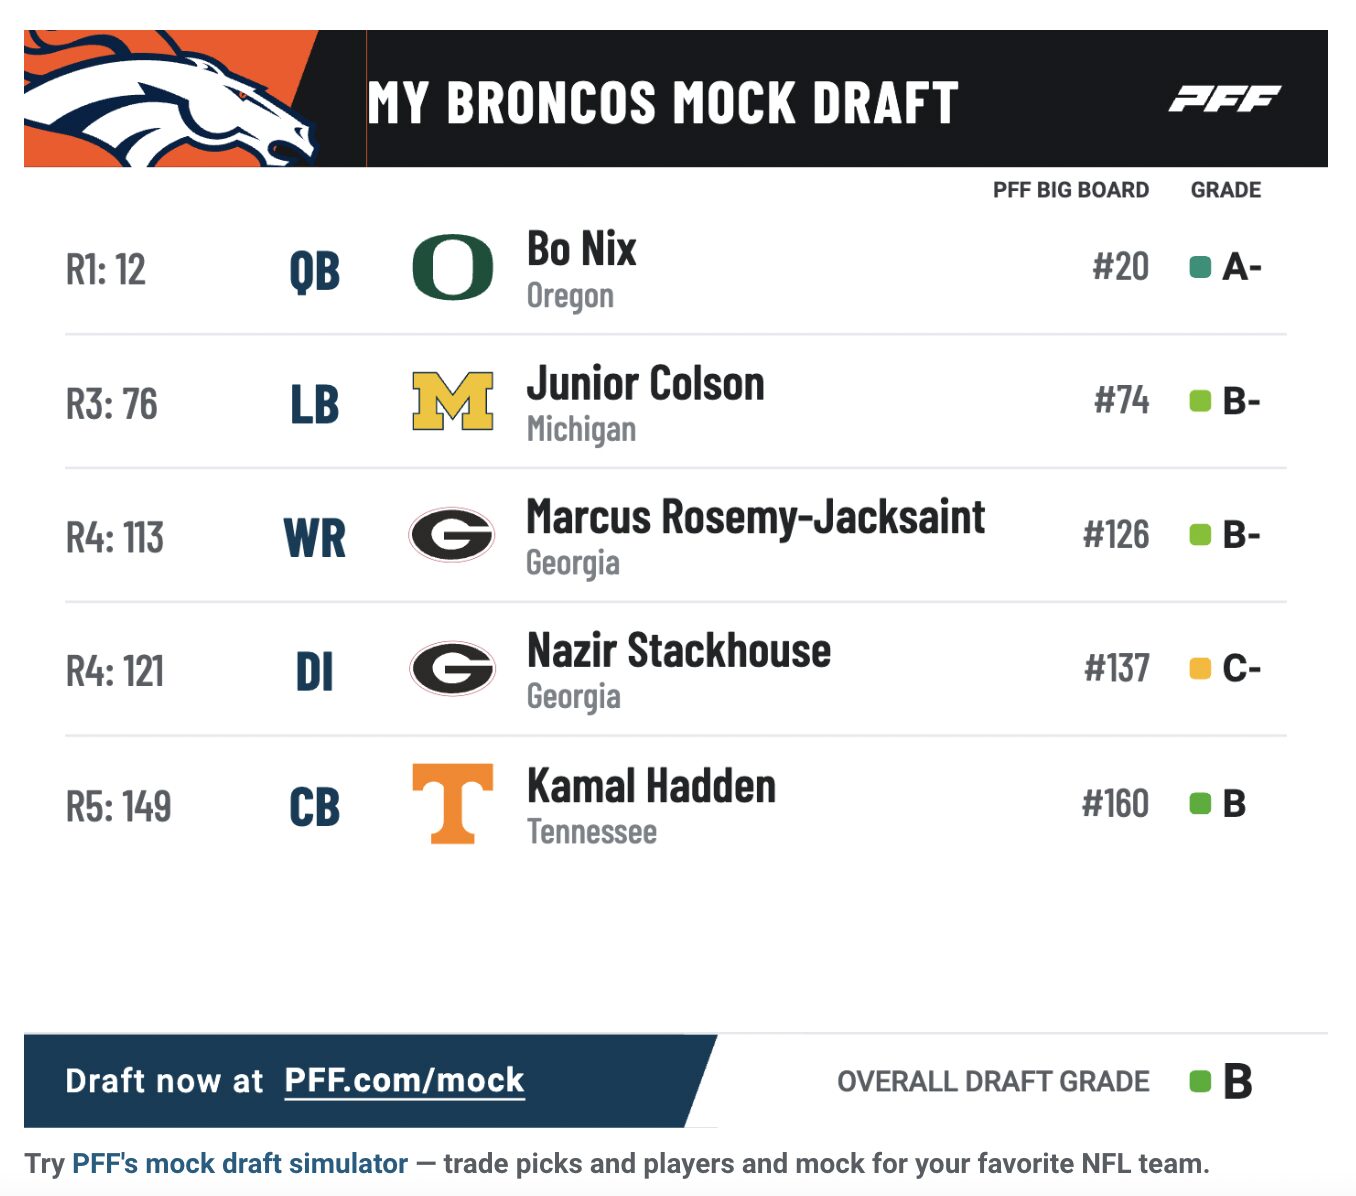 Broncos mock draft by PFF. 